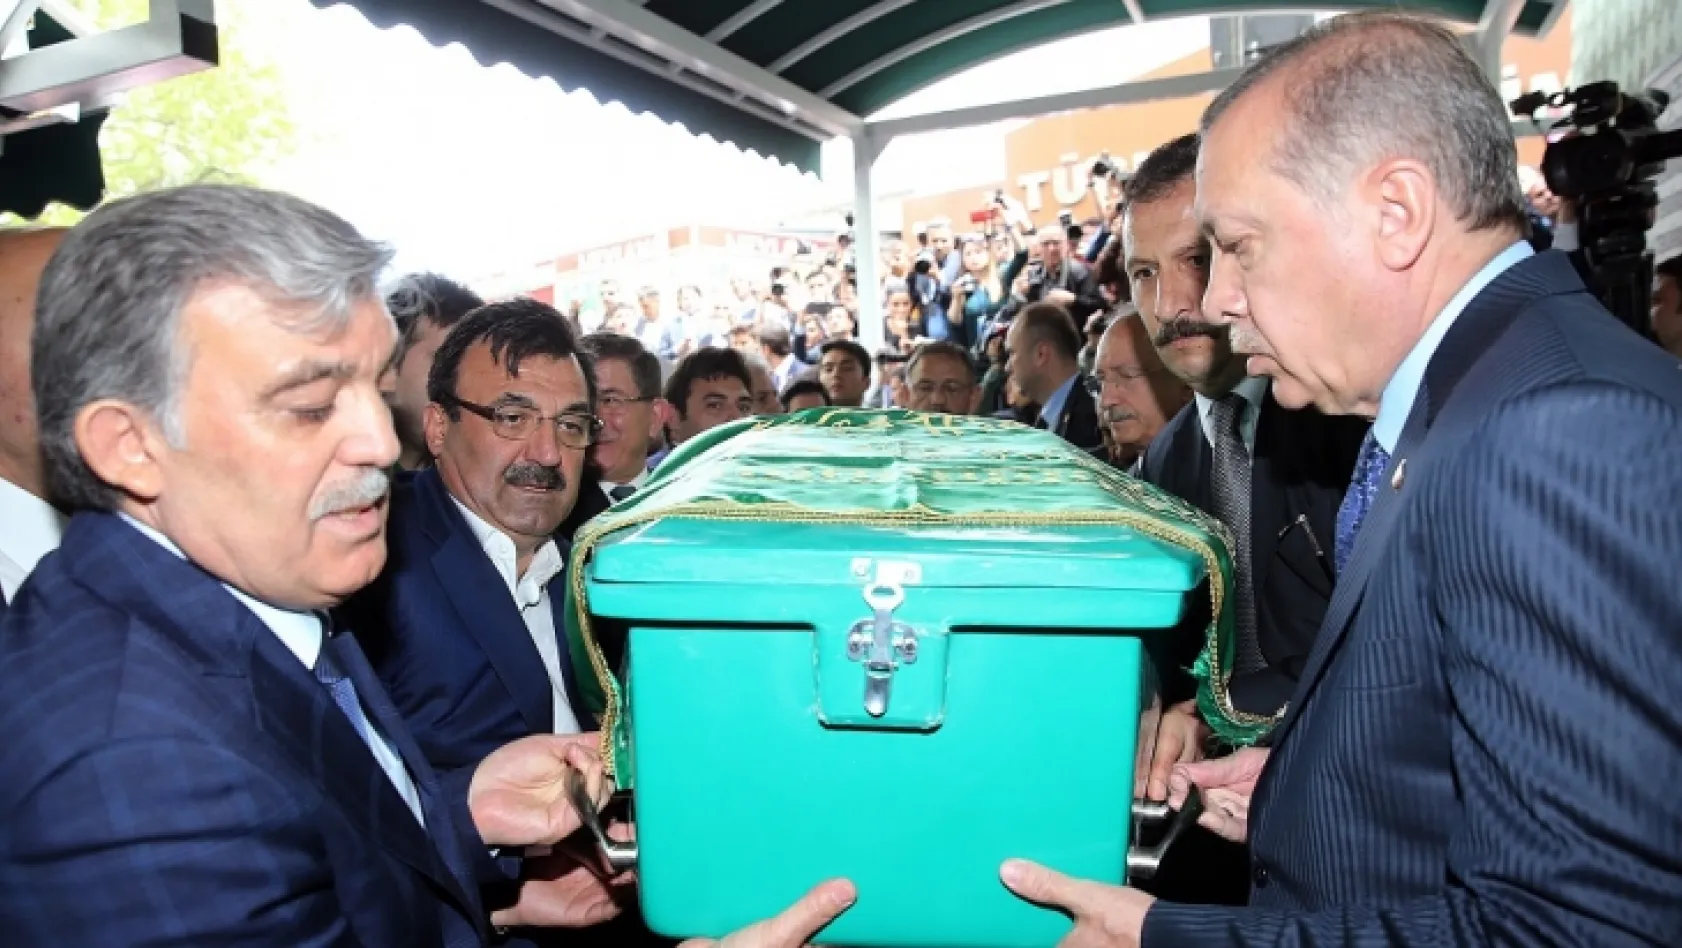 11. Cumhurbaşkanı Gül'ün babası son yolculuğuna uğurlandı